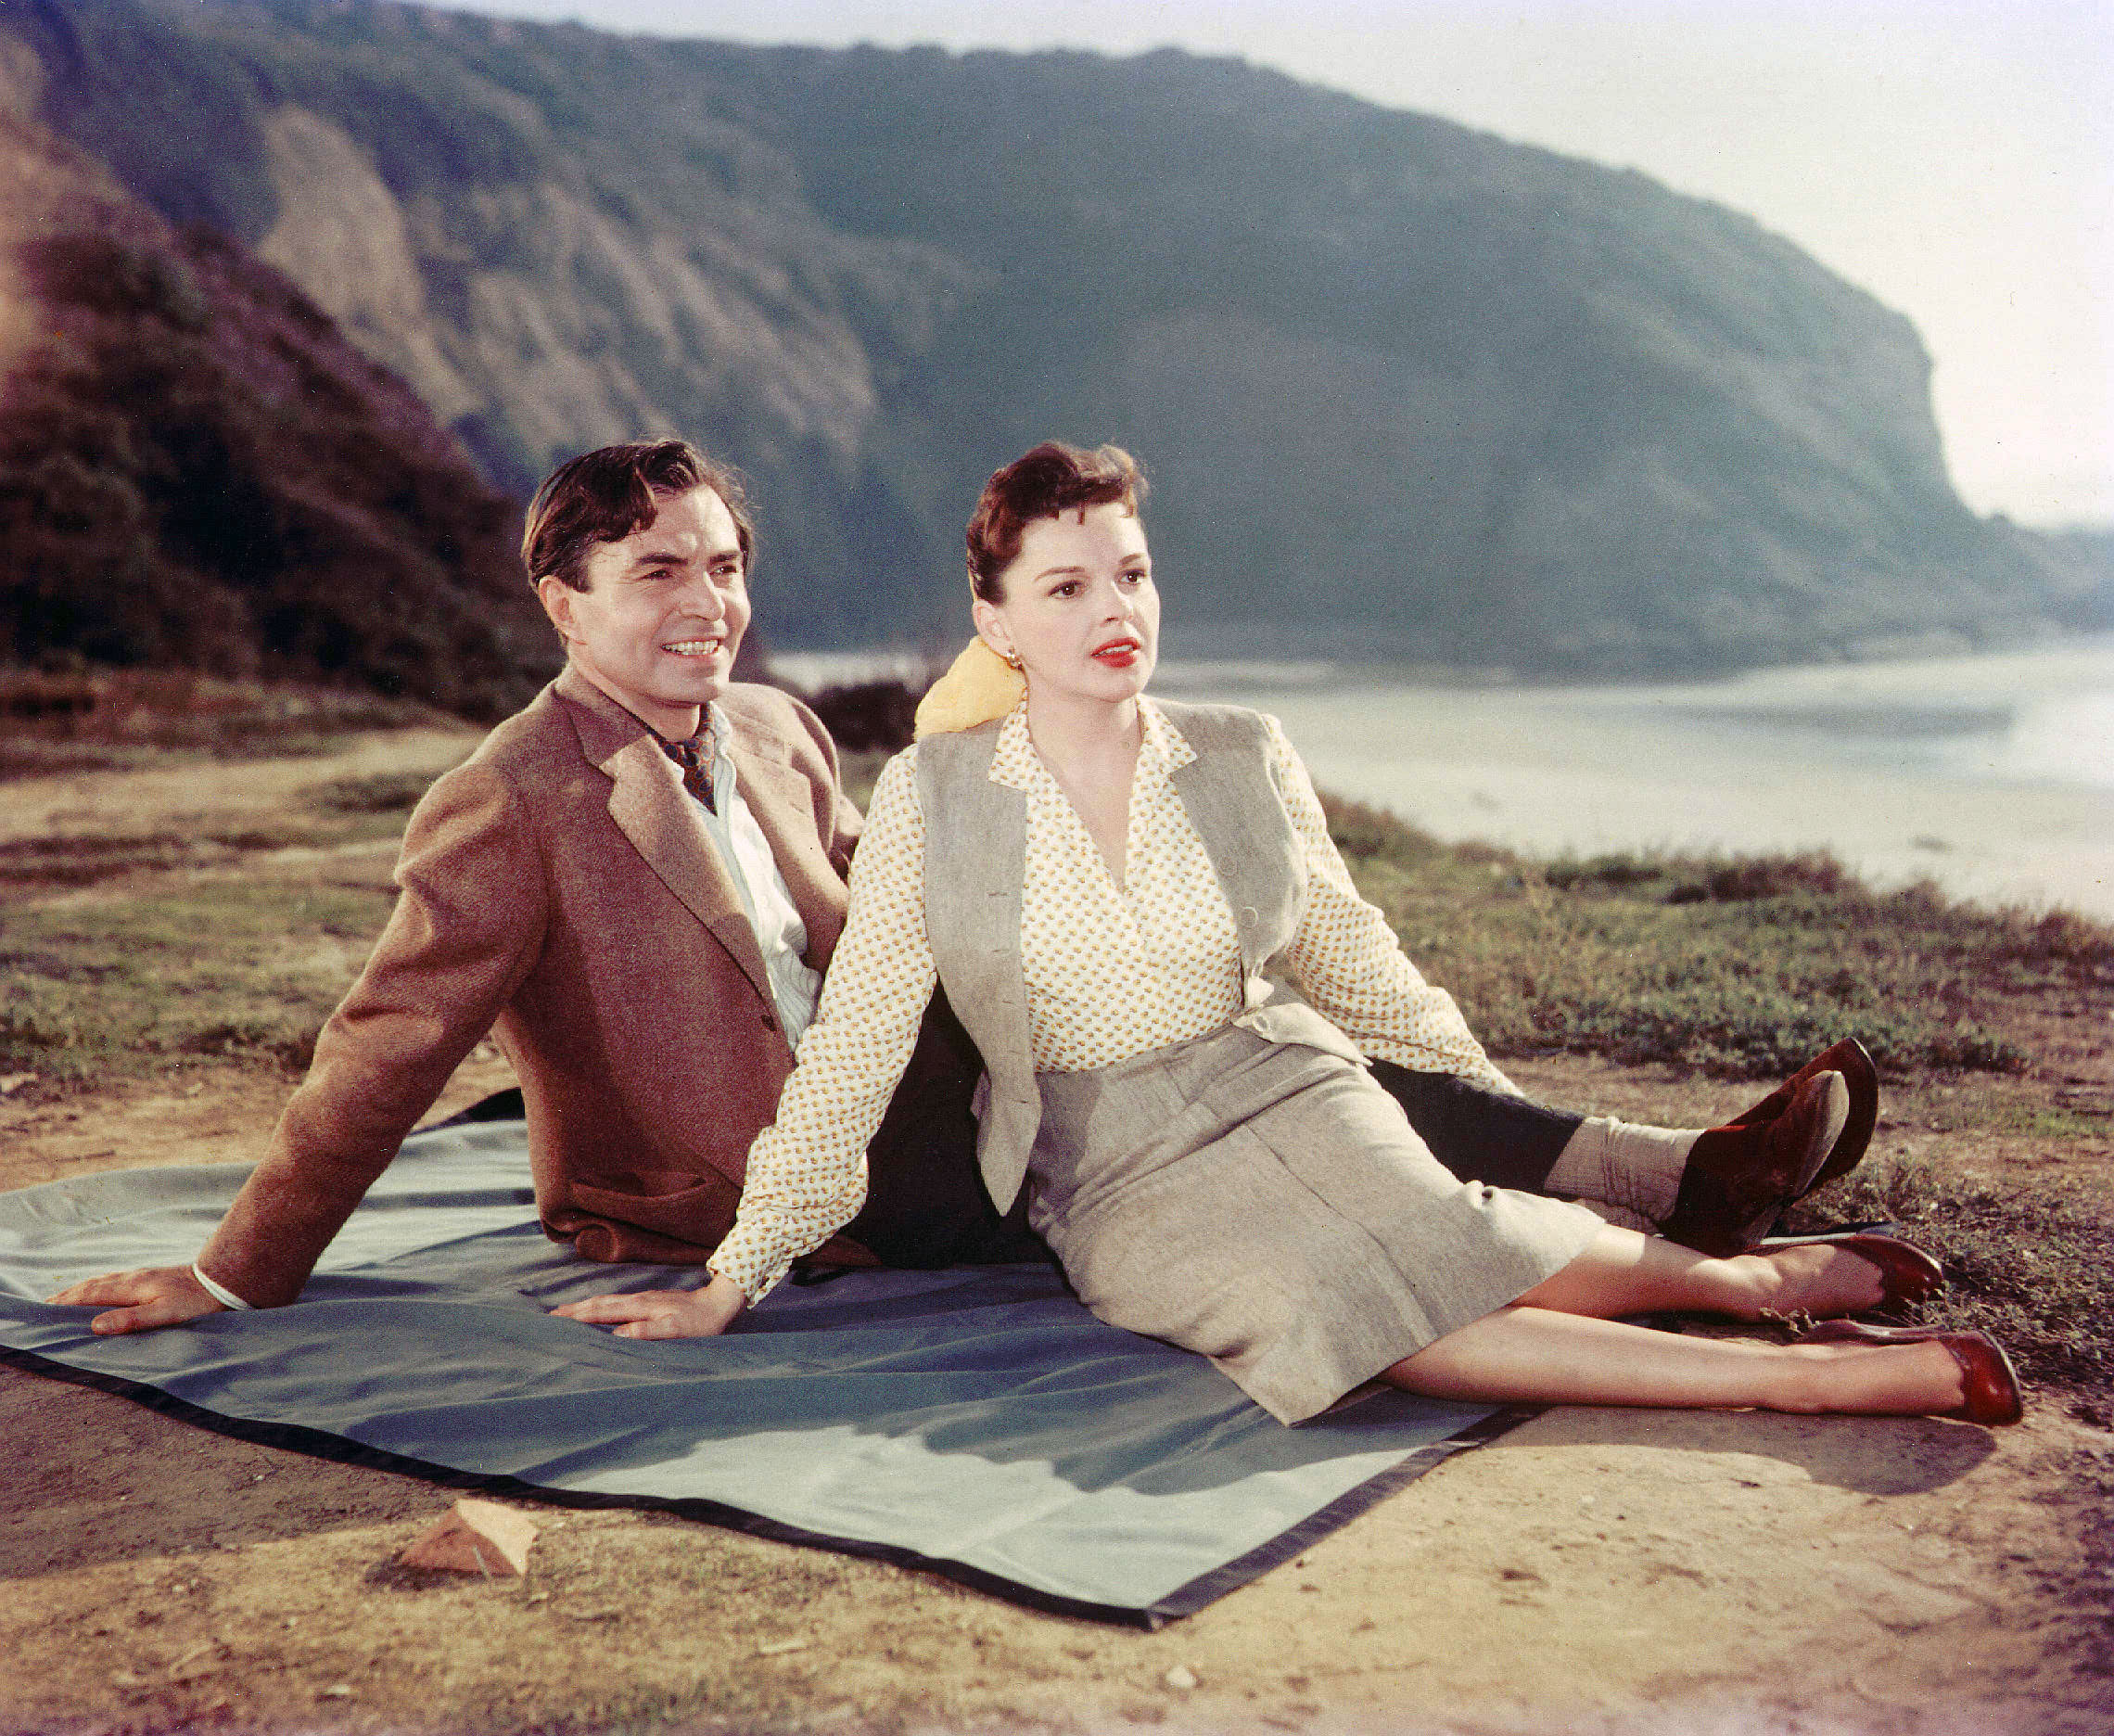 James Mason and Judy Garland in "A Star Is Born," 1954. (Warner Bros/Kobal/REX/Shutterstock)